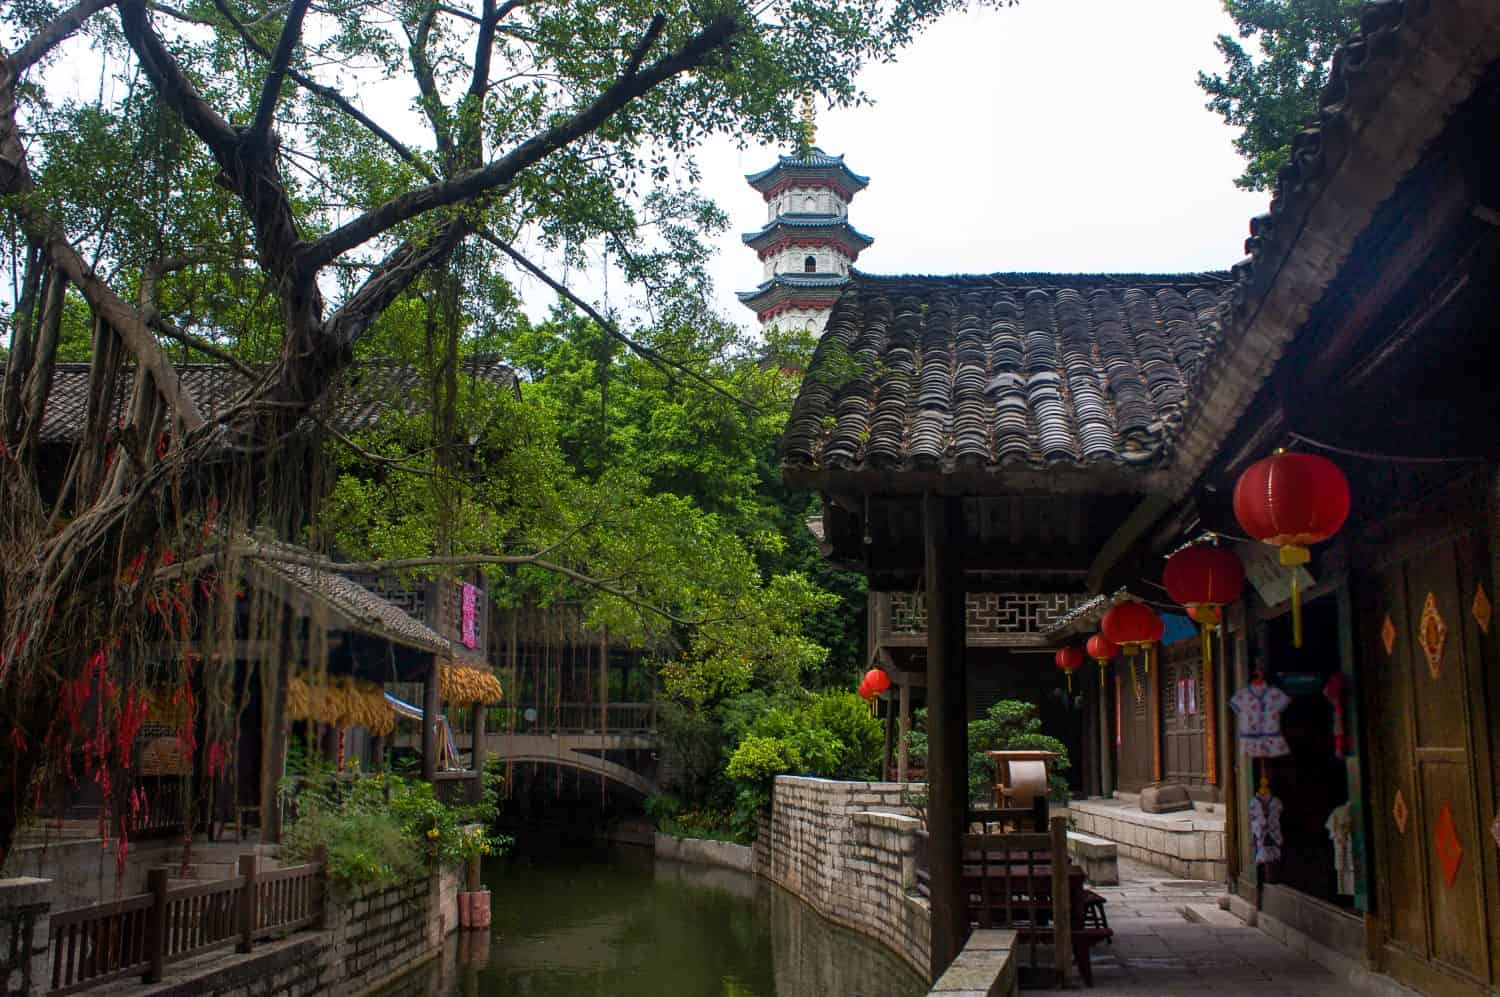 Un esempio di edifici tradizionali cinesi a Shenzen in Cina